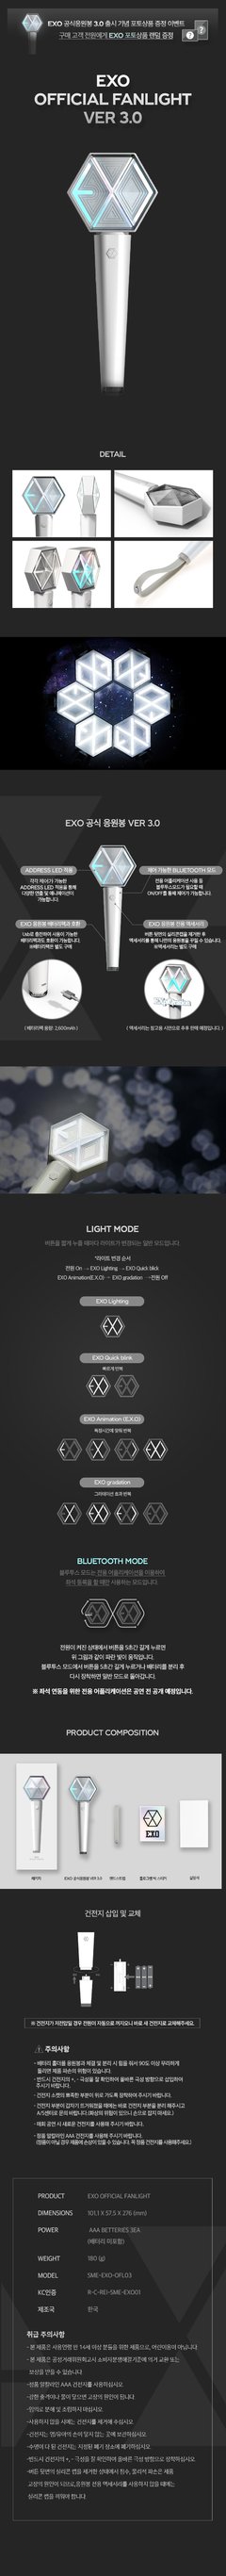 Lightstick EXO ver 3.0 OFICIAL en internet